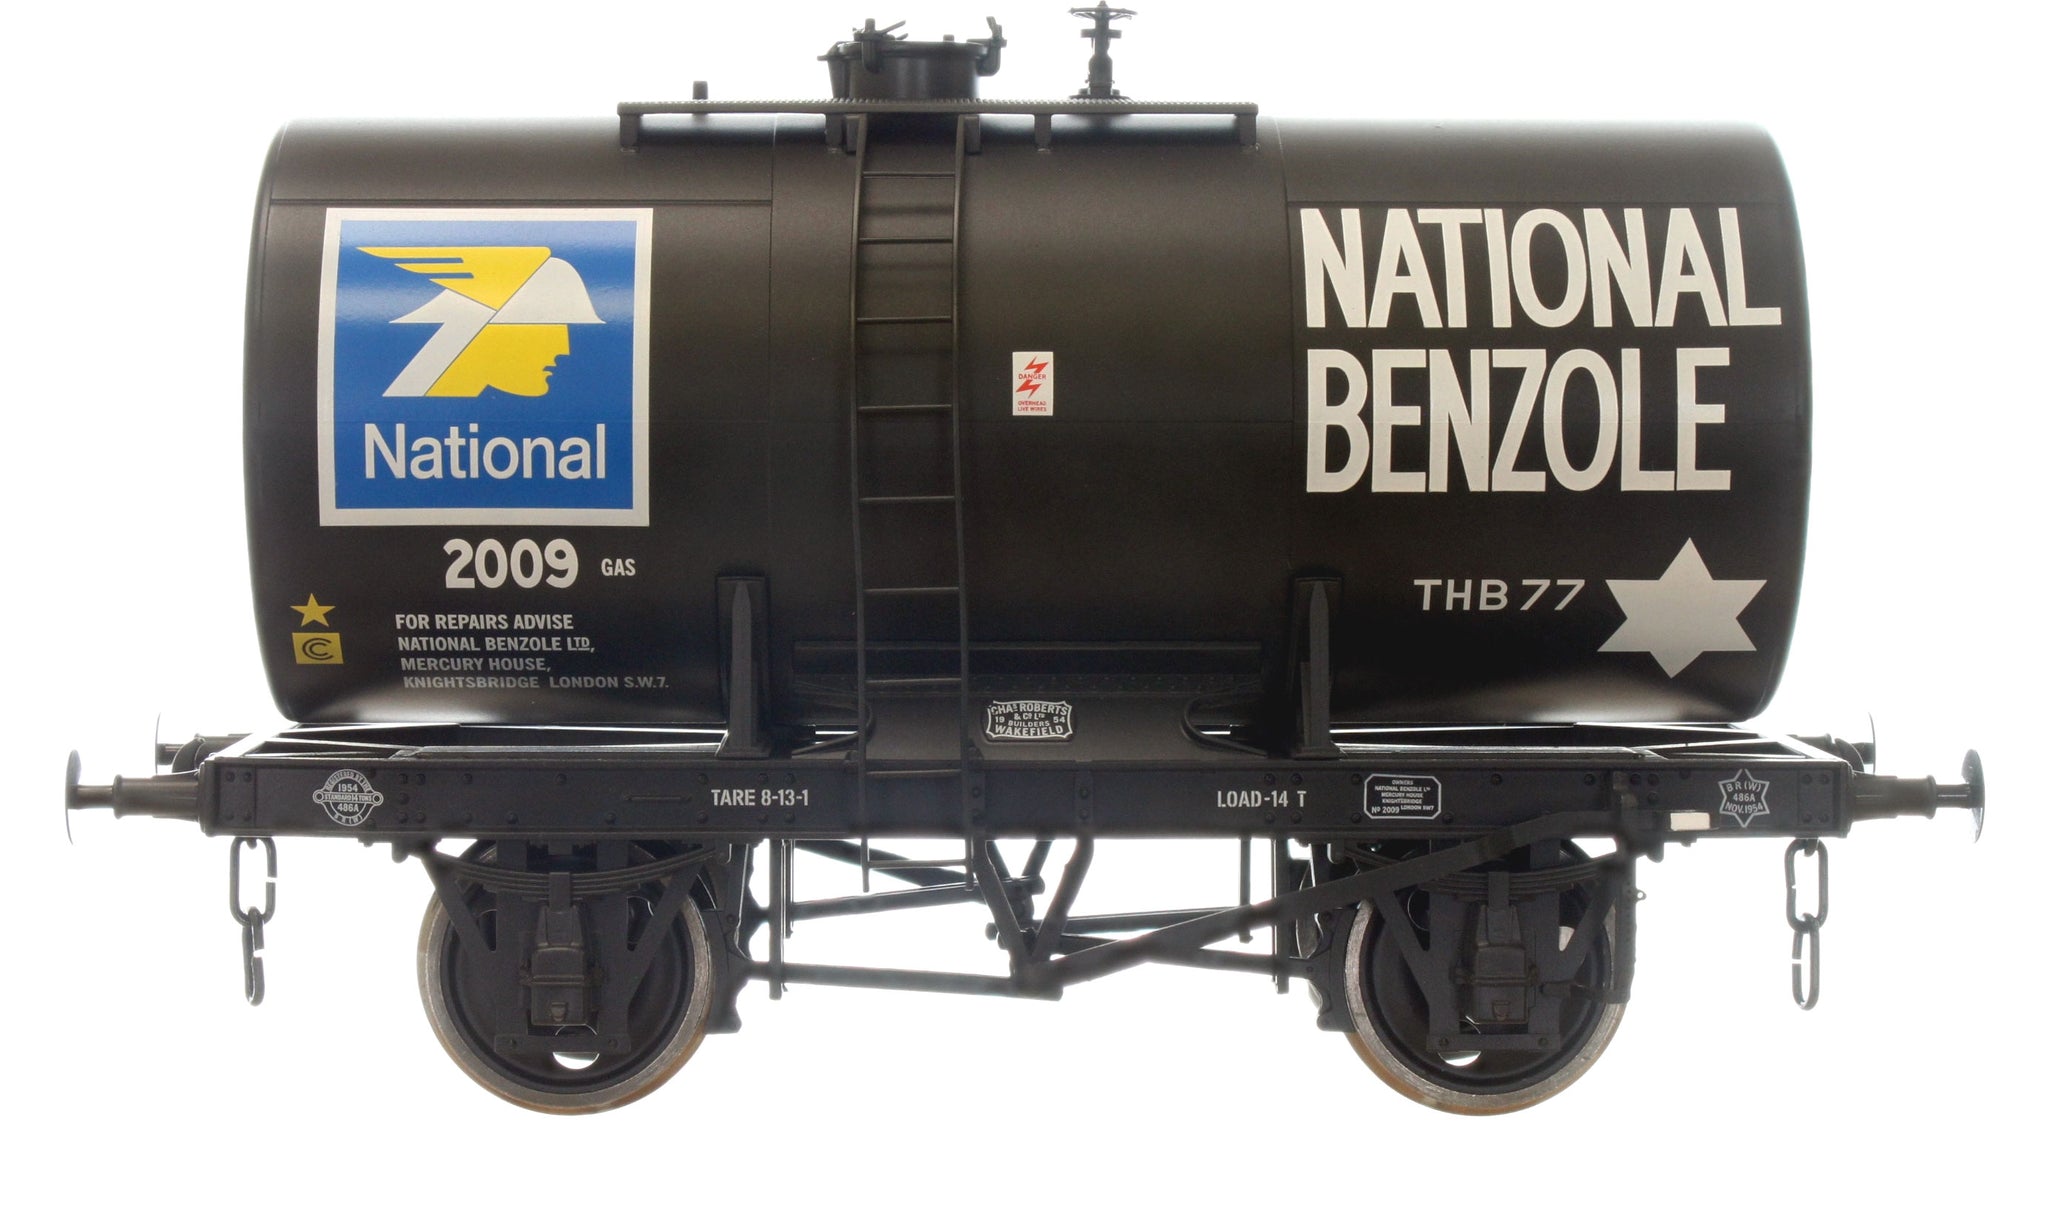 7F-063-001 Class B Anchor Mounted Tank National Benzole 2009